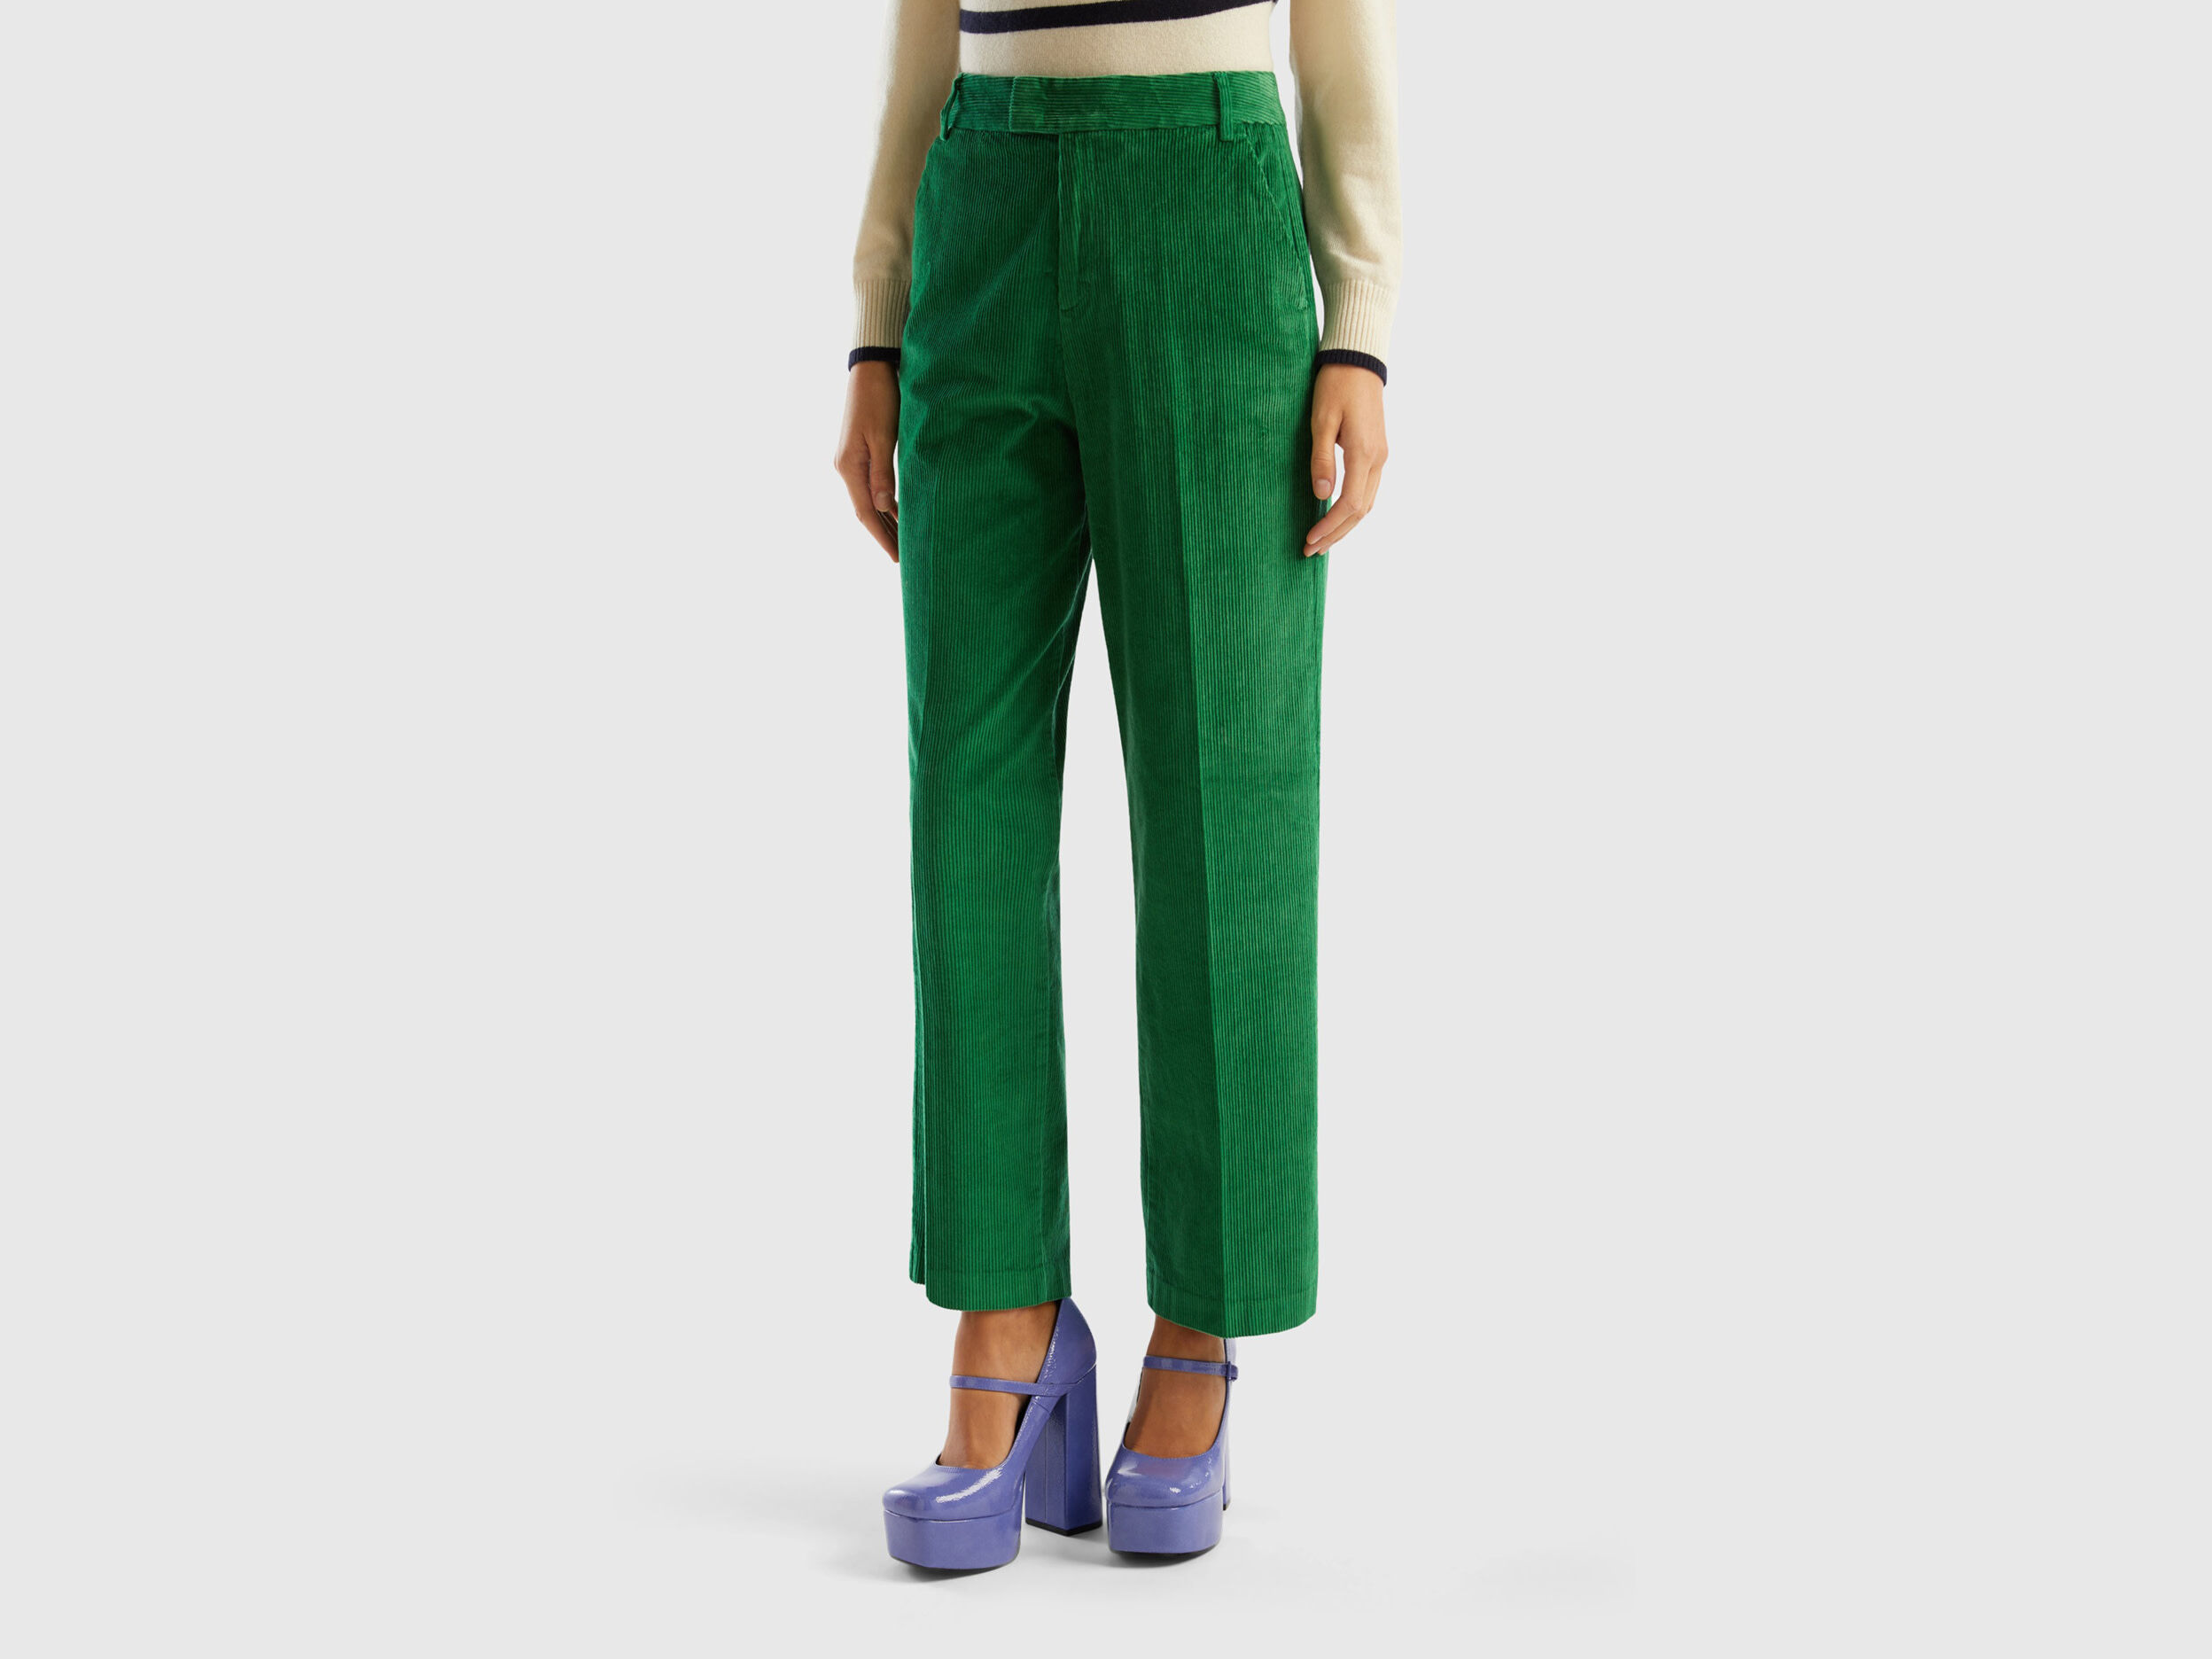 Olive Green Corduroy Pants - Flare Leg Pants - High Rise Pants - Lulus